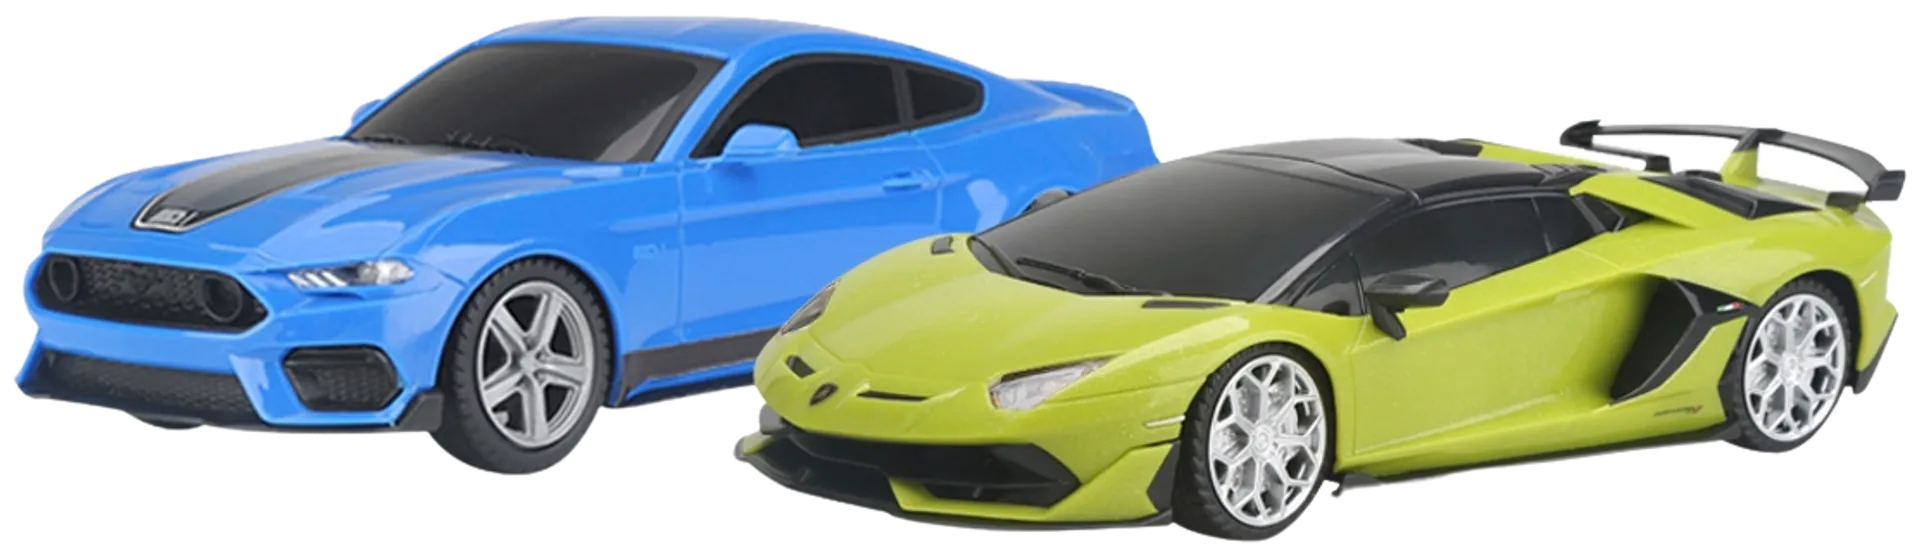 Koolspeed Lamborghini/Ford Mustang Rc Asst. 1:24 - 1